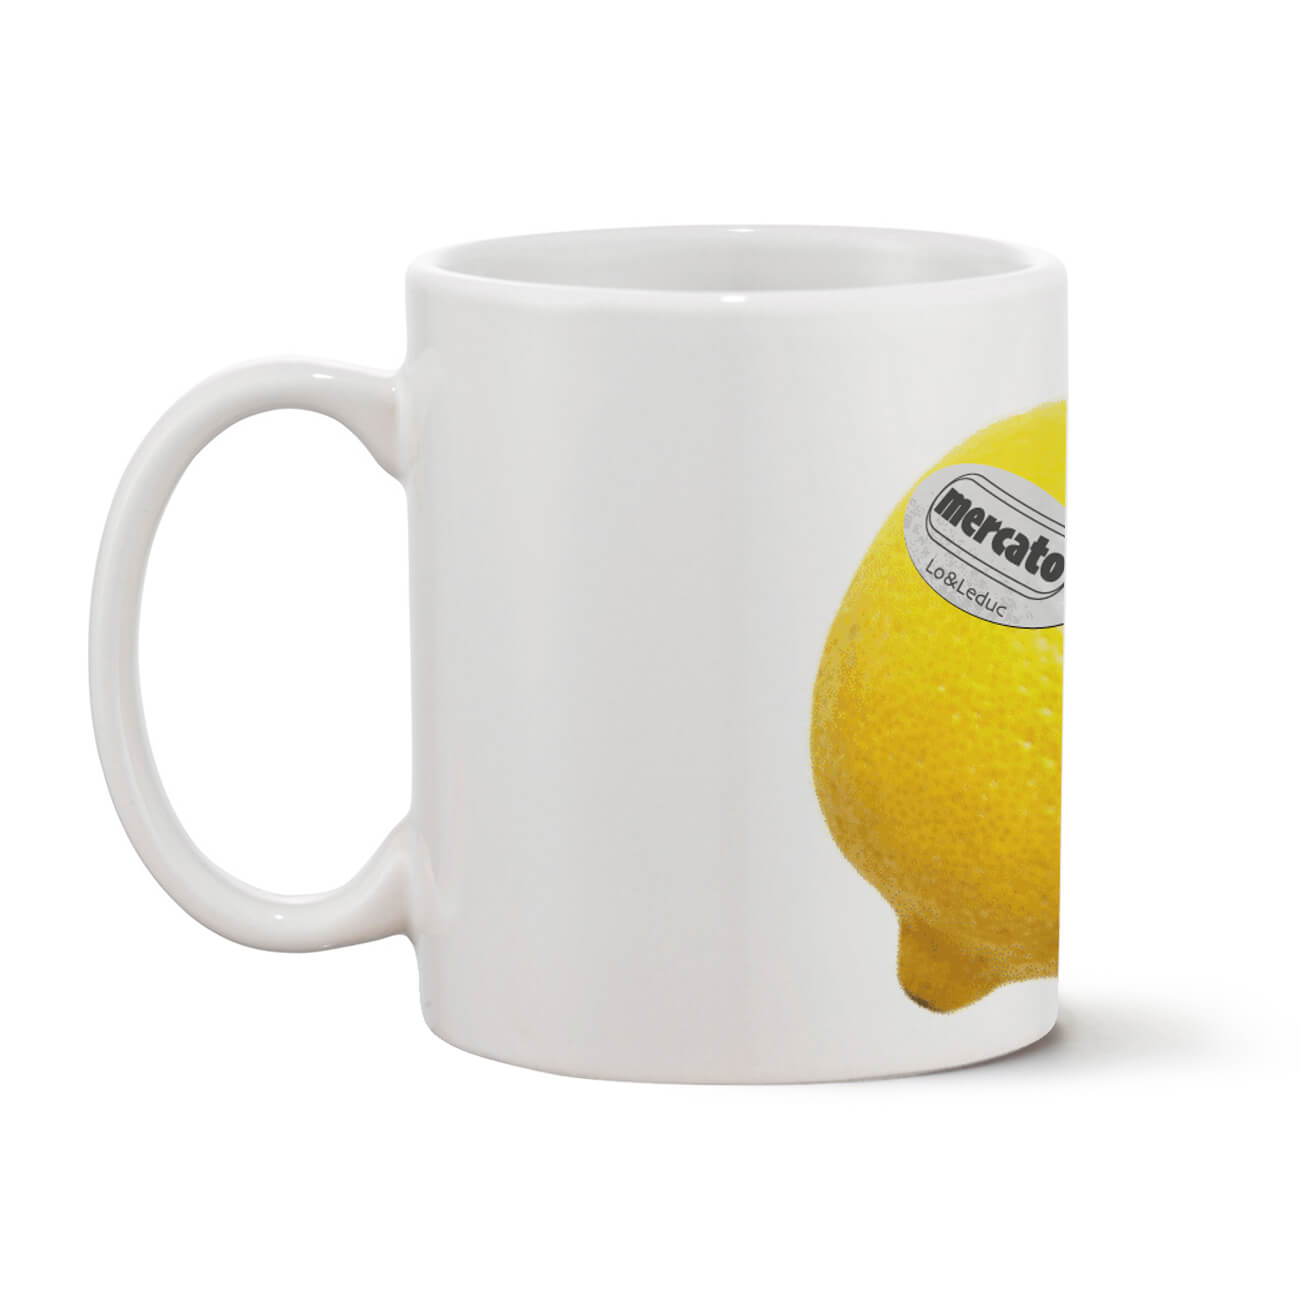 Lo & Leduc | Tasse | Zitrone